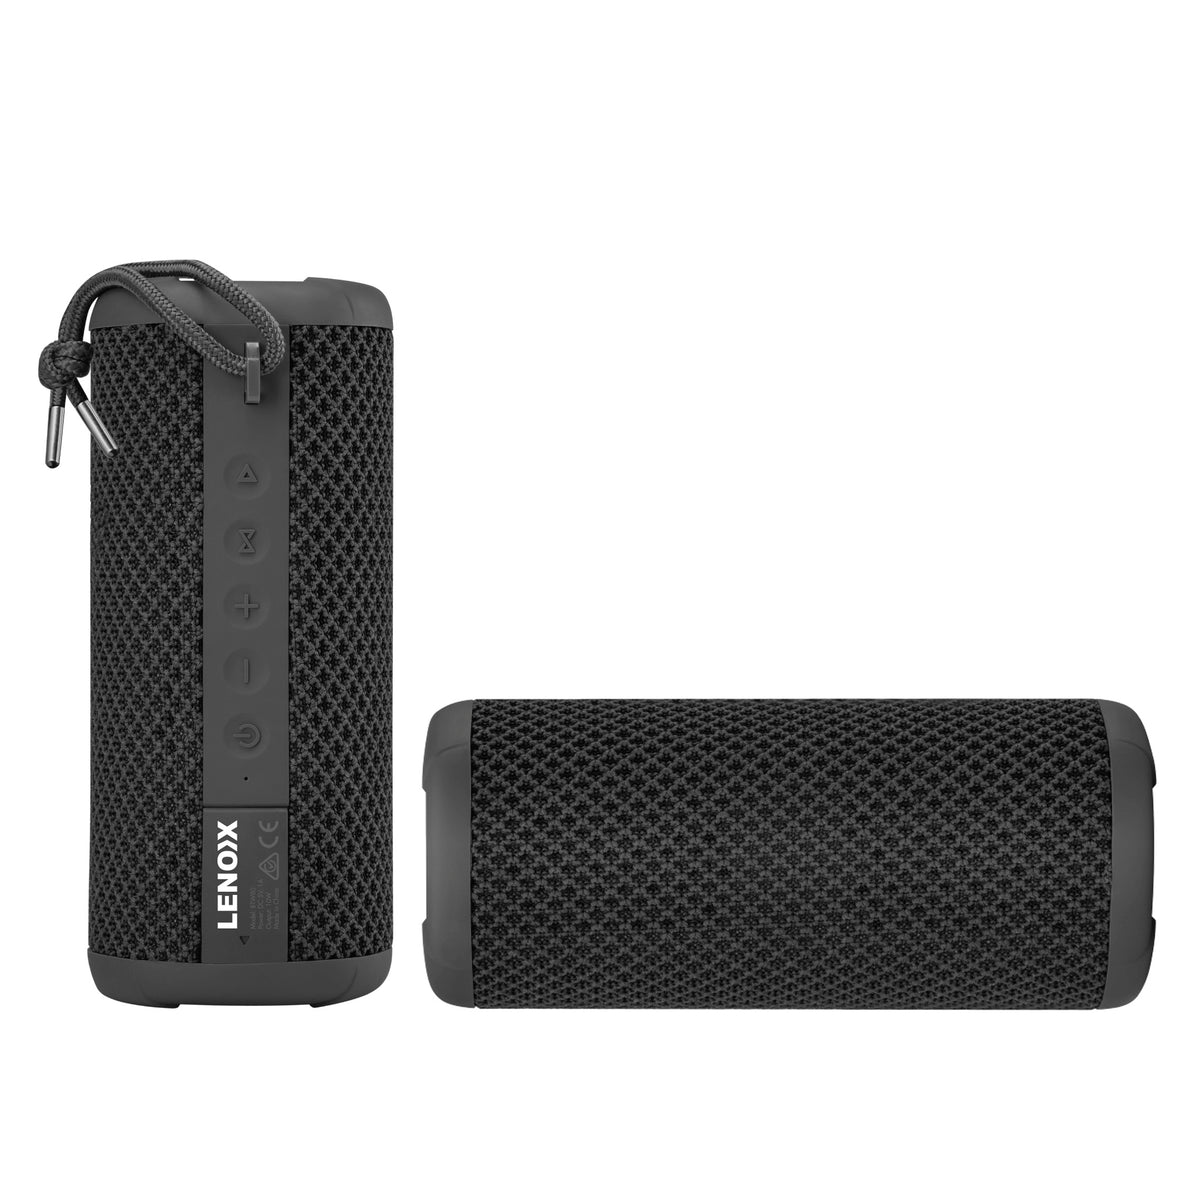 Black portable bluetooth speaker with sleek control panel.